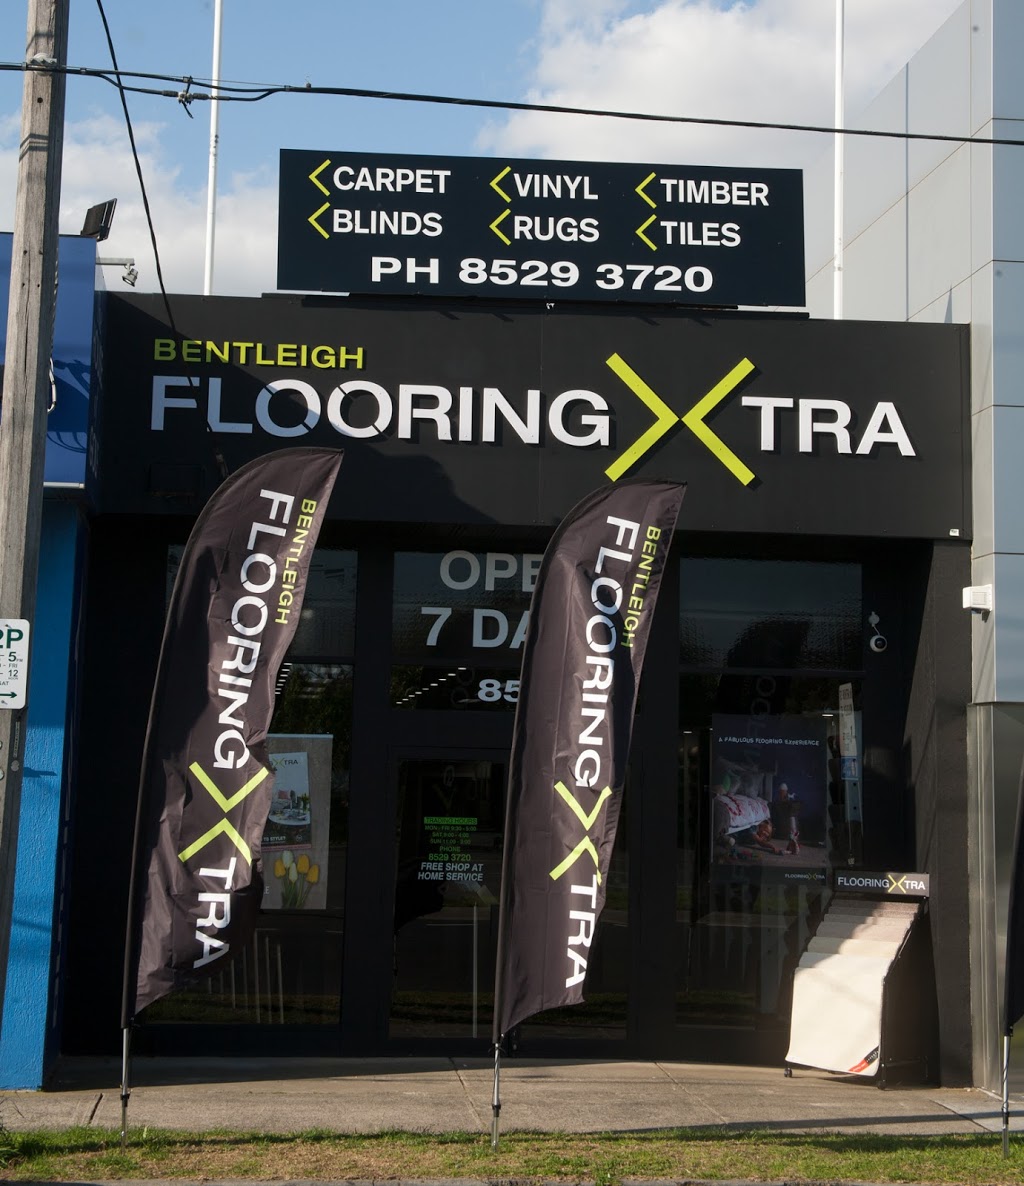 Bentleigh Flooring Xtra | home goods store | 853 Nepean Hwy, Bentleigh VIC 3204, Australia | 0385293720 OR +61 3 8529 3720